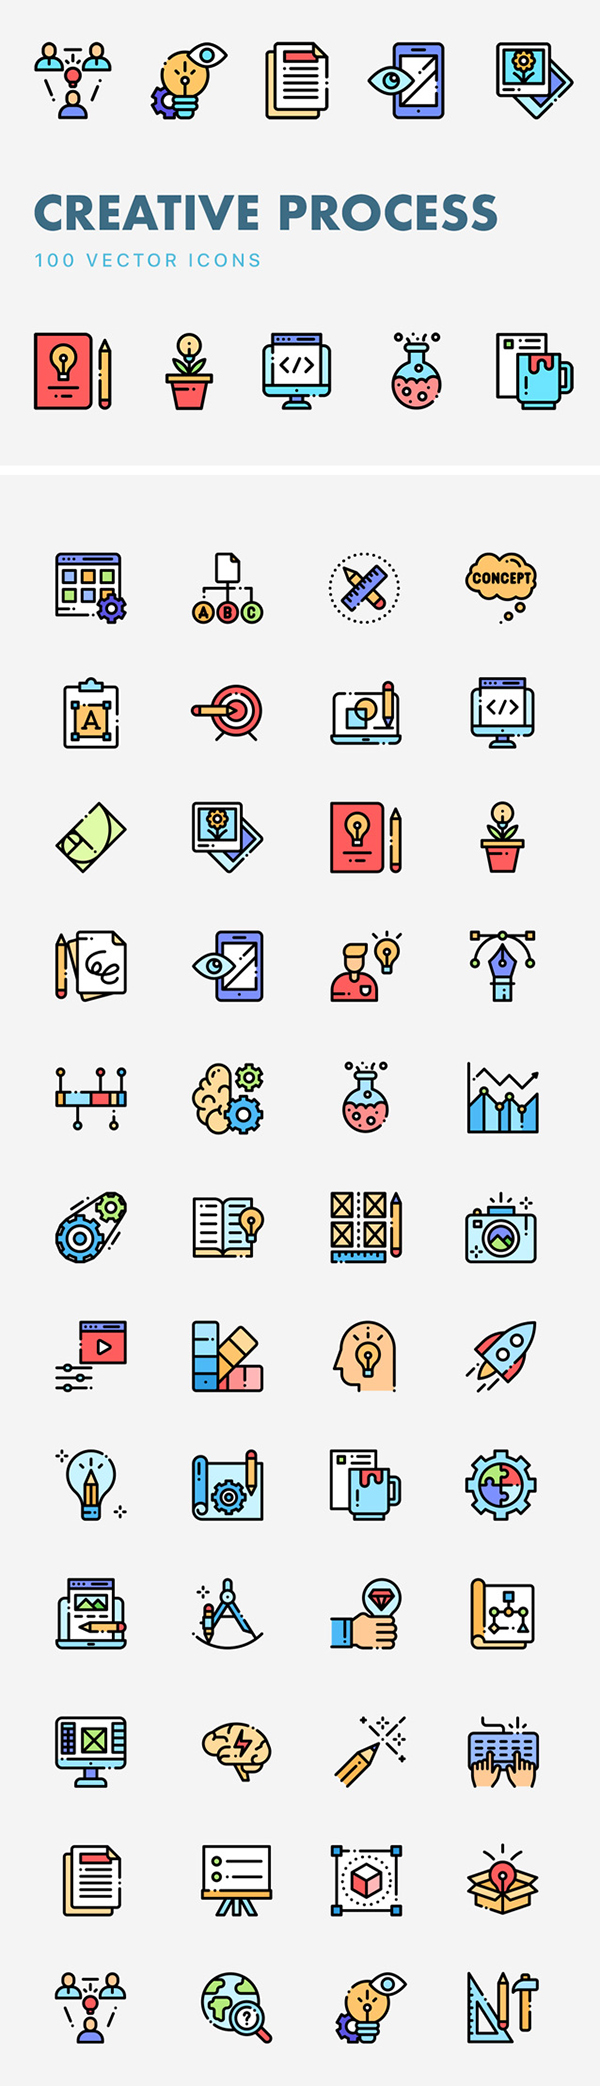 Creative Process Vector Icons